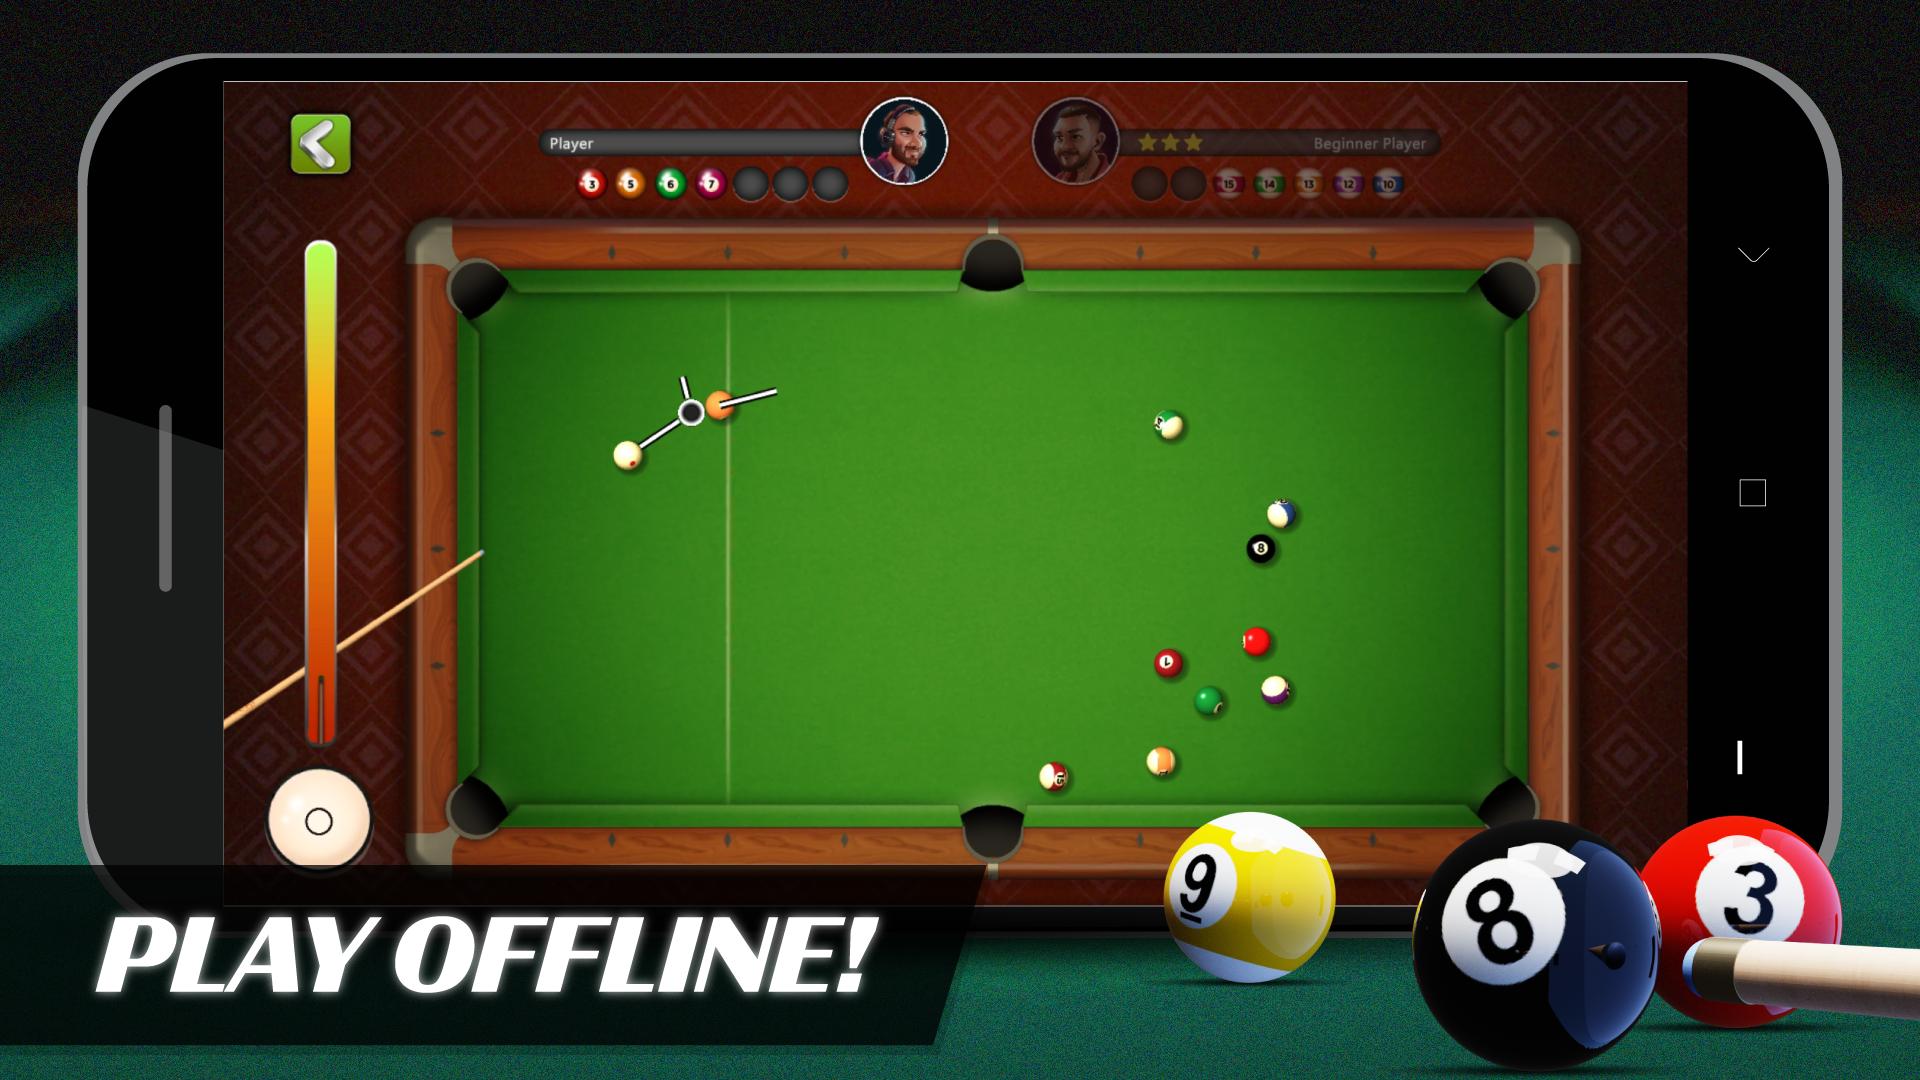 8 Ball Billiards- Offline Free Pool Game 1.51 Screenshot 1